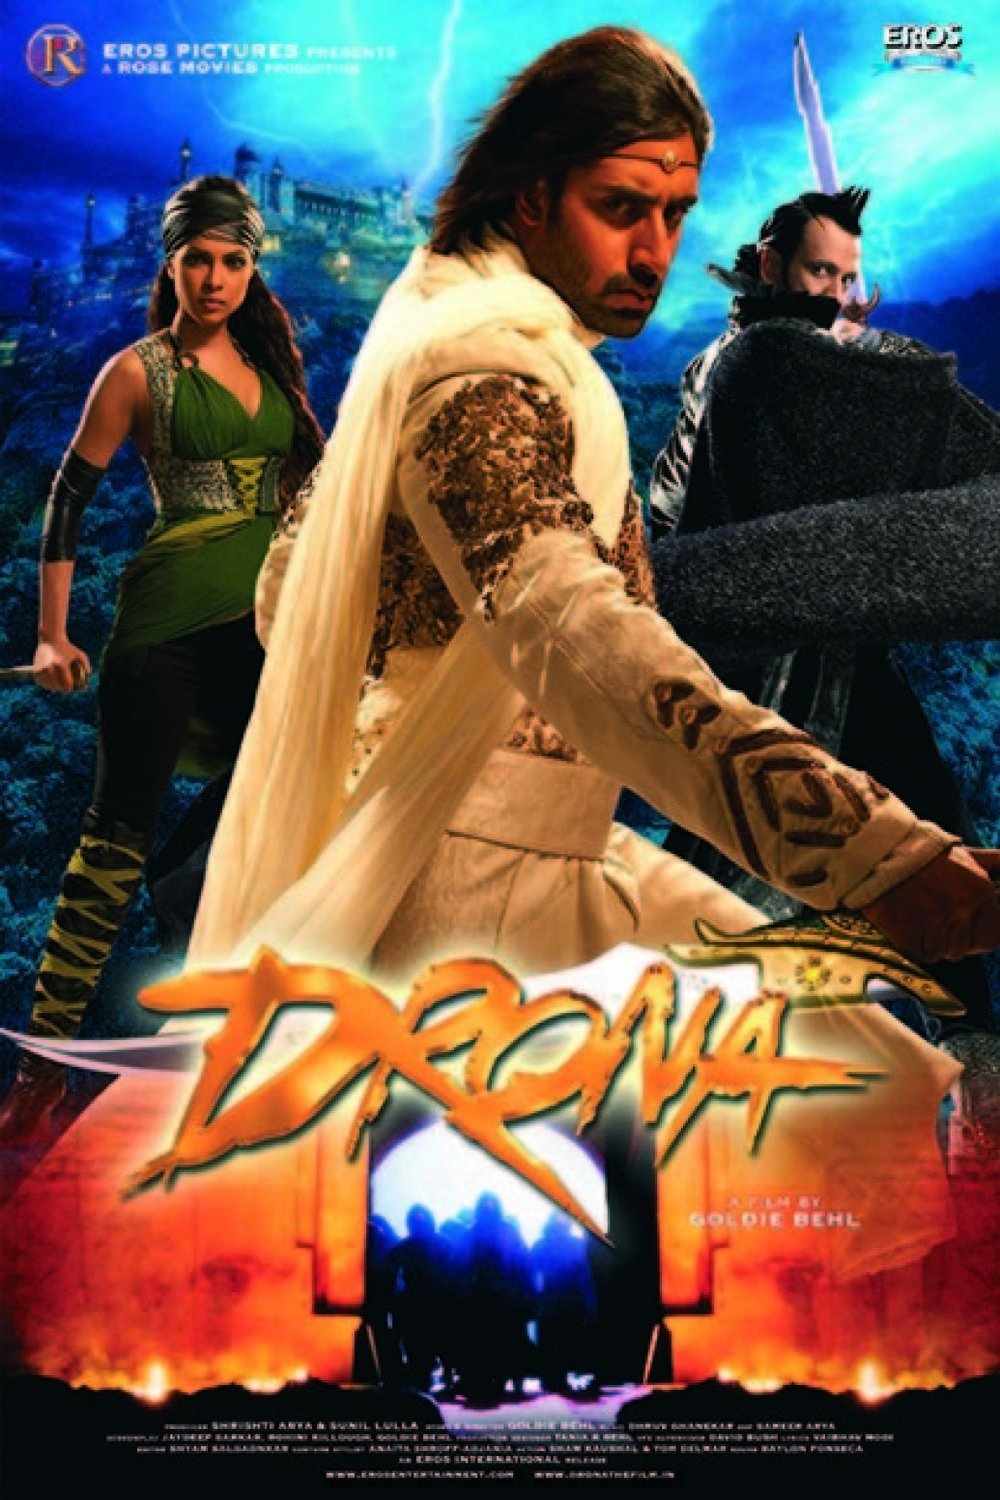 Hindi poster of the movie Drona